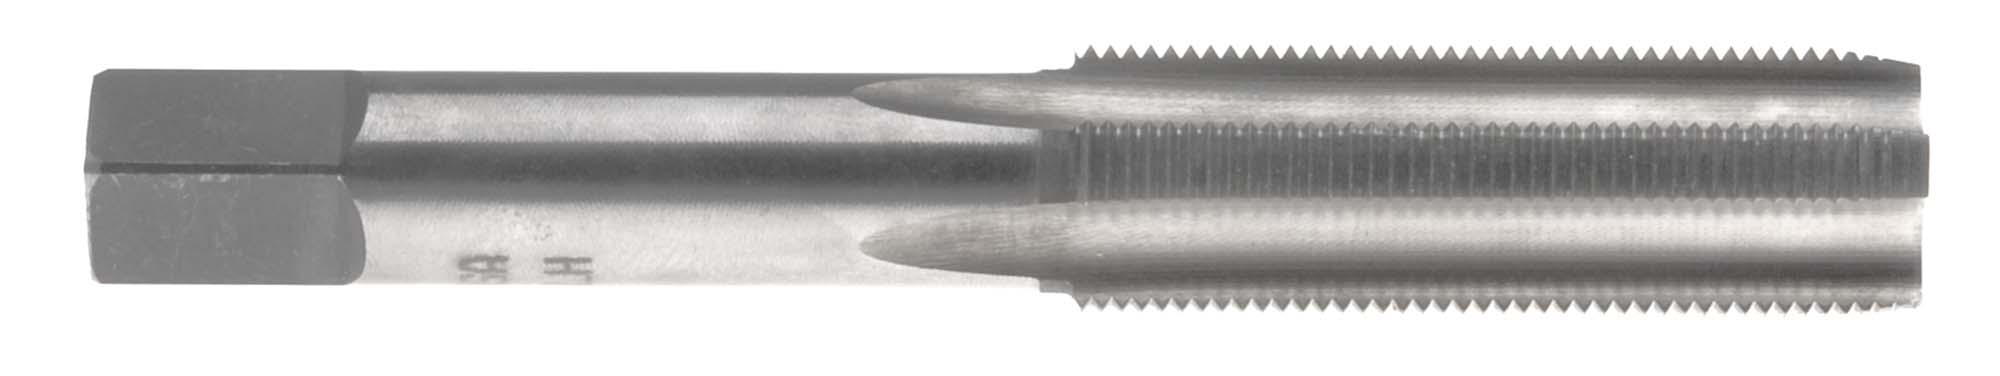 22mm x 1.5 LEFT HAND Plug Tap  - High Speed Steel